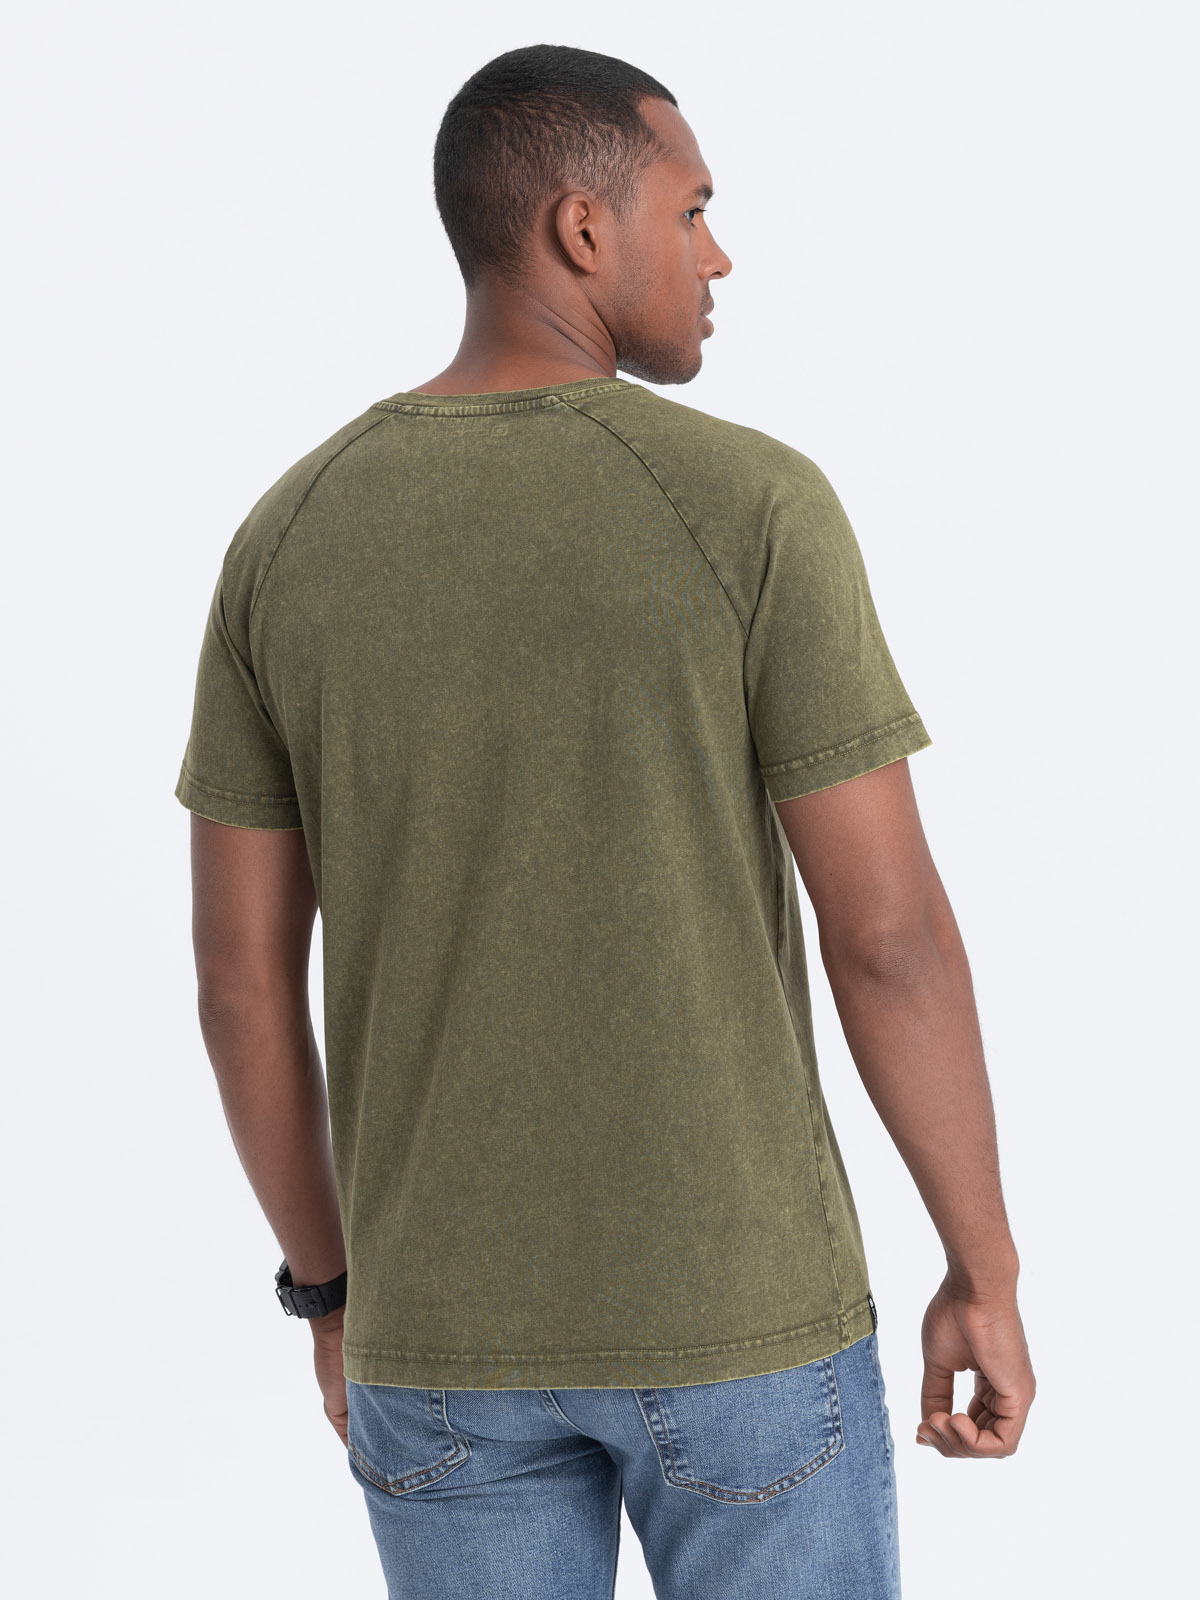 Men\'s T-shirt with henley neckline - olive online Men\'s clothing | V4 Ombre.com - dark S1757